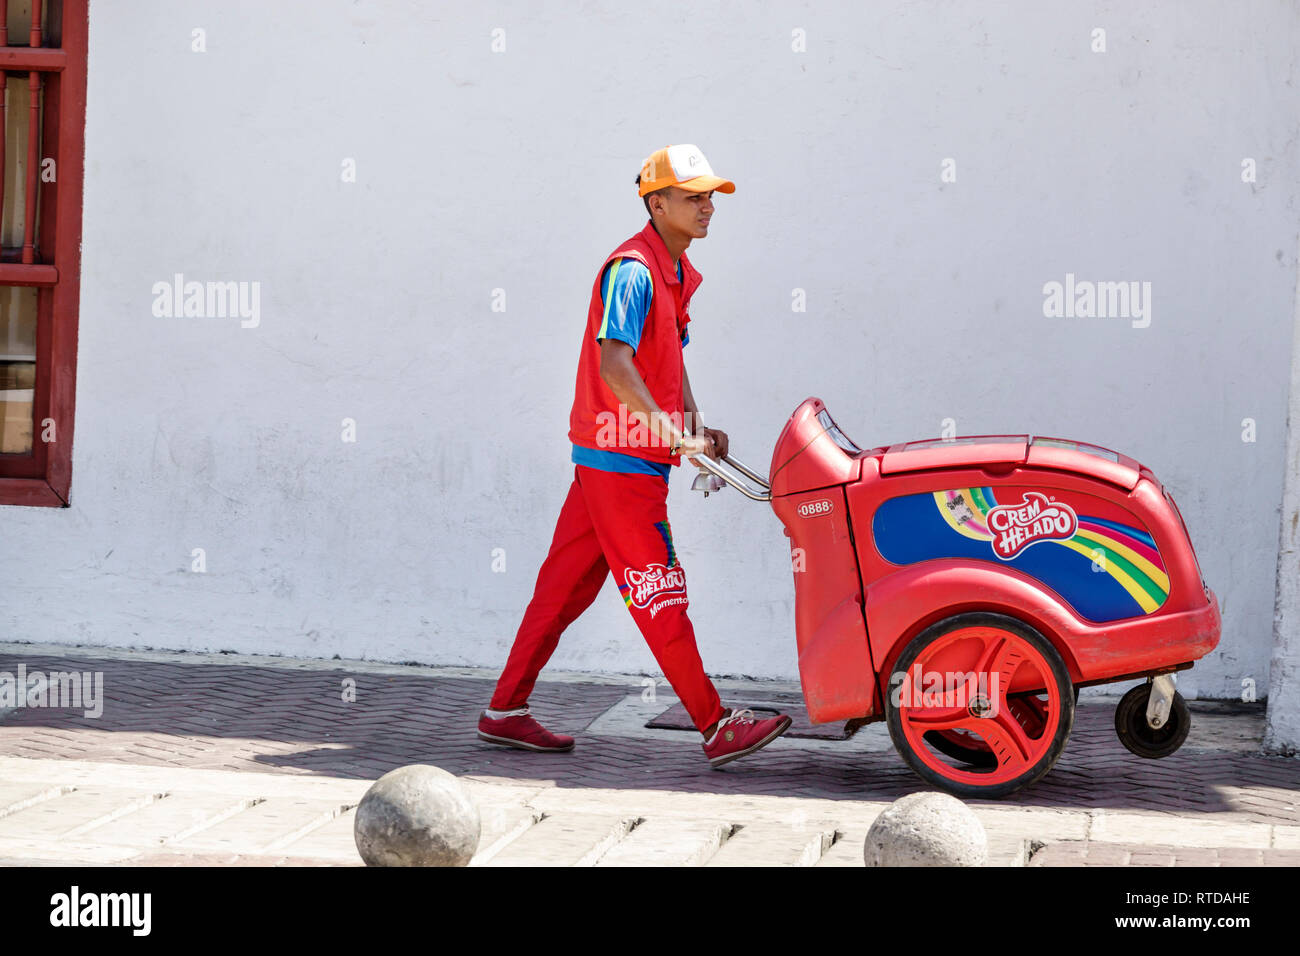 Cartagena Colombia,Hispanic resident residents,ice cream rolling cart vendor Crem Helado,man men male,young adult,pushing,uniform,working,COL190119107 Stock Photo